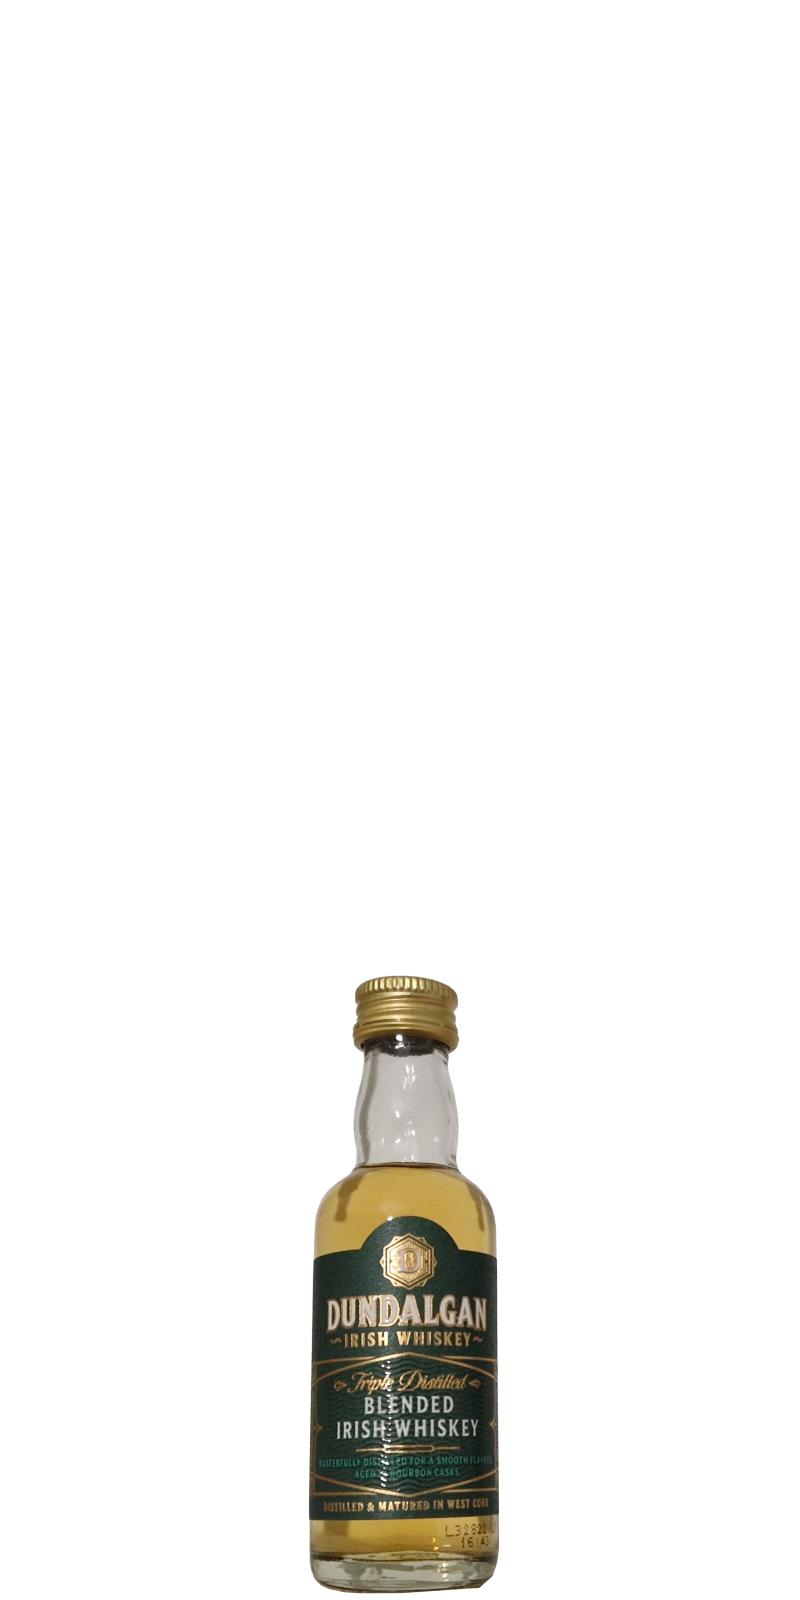 Billigwaren Dundalgan Blended Irish - Whiskey Ratings reviews Whiskybase and 